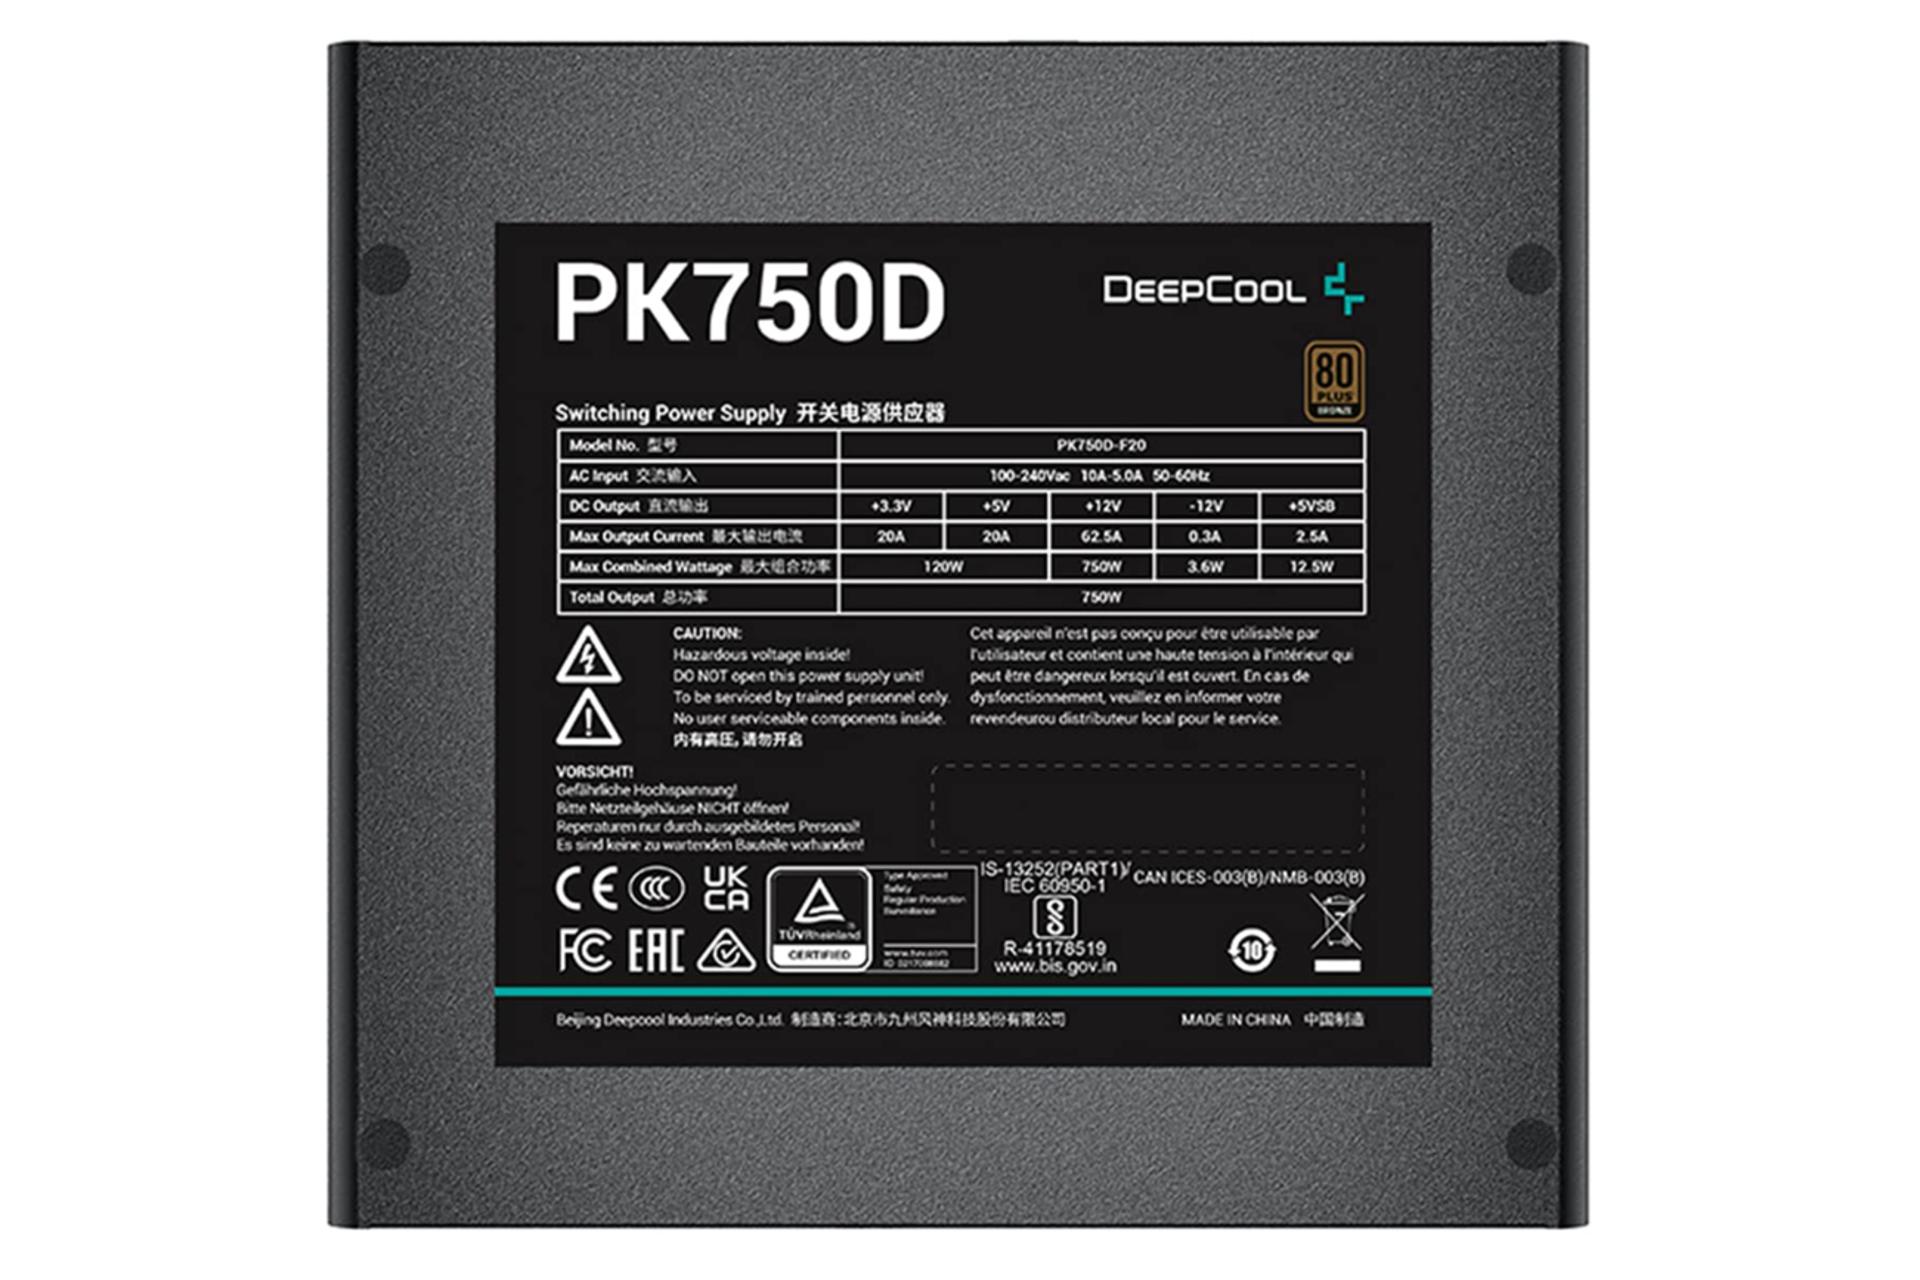 توان پاور کامپیوتر دیپ کول DEEPCOOL PK750D با توان 750 وات